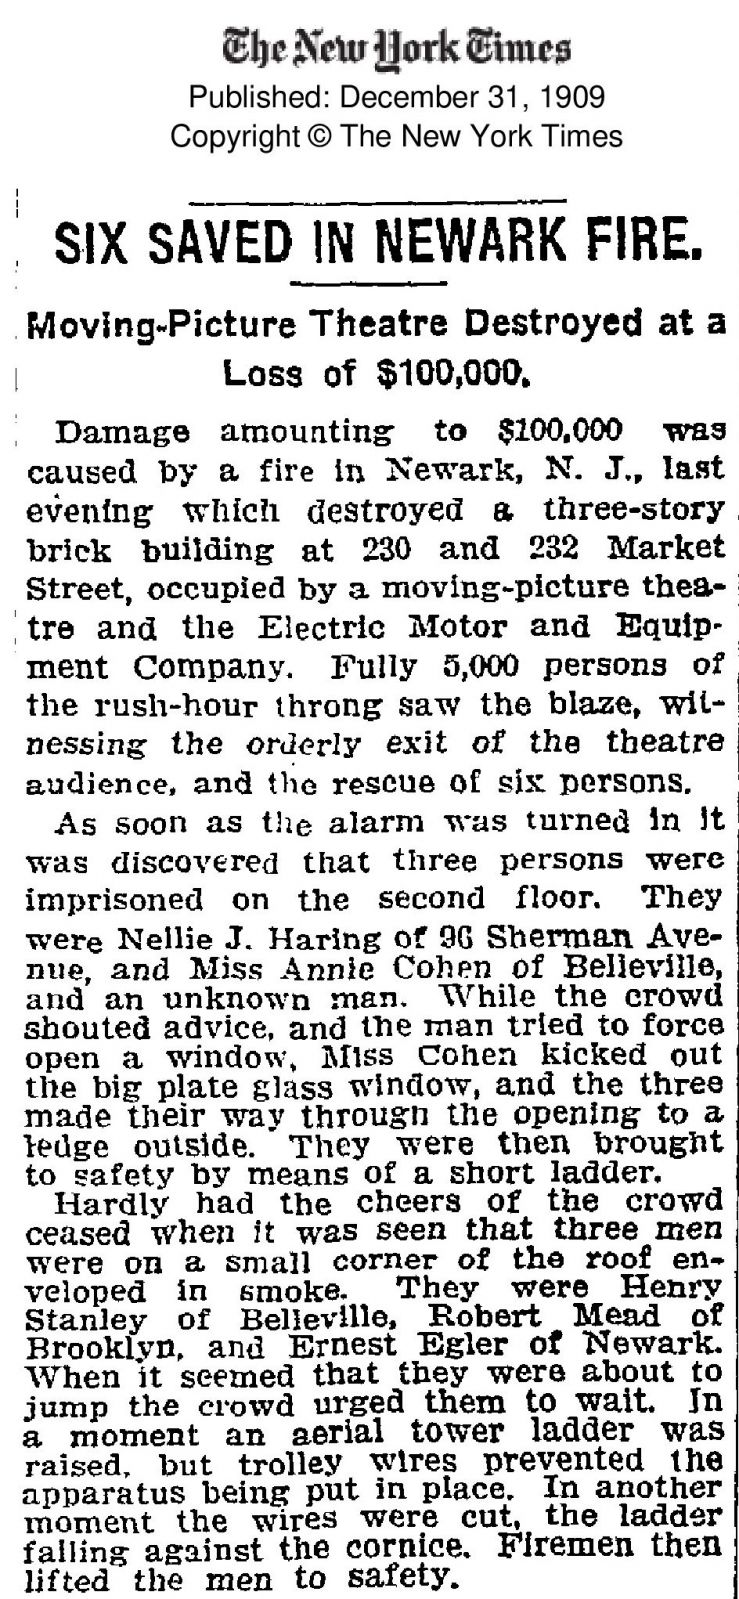 Six Saved in Newark Fire
December 31, 1909
